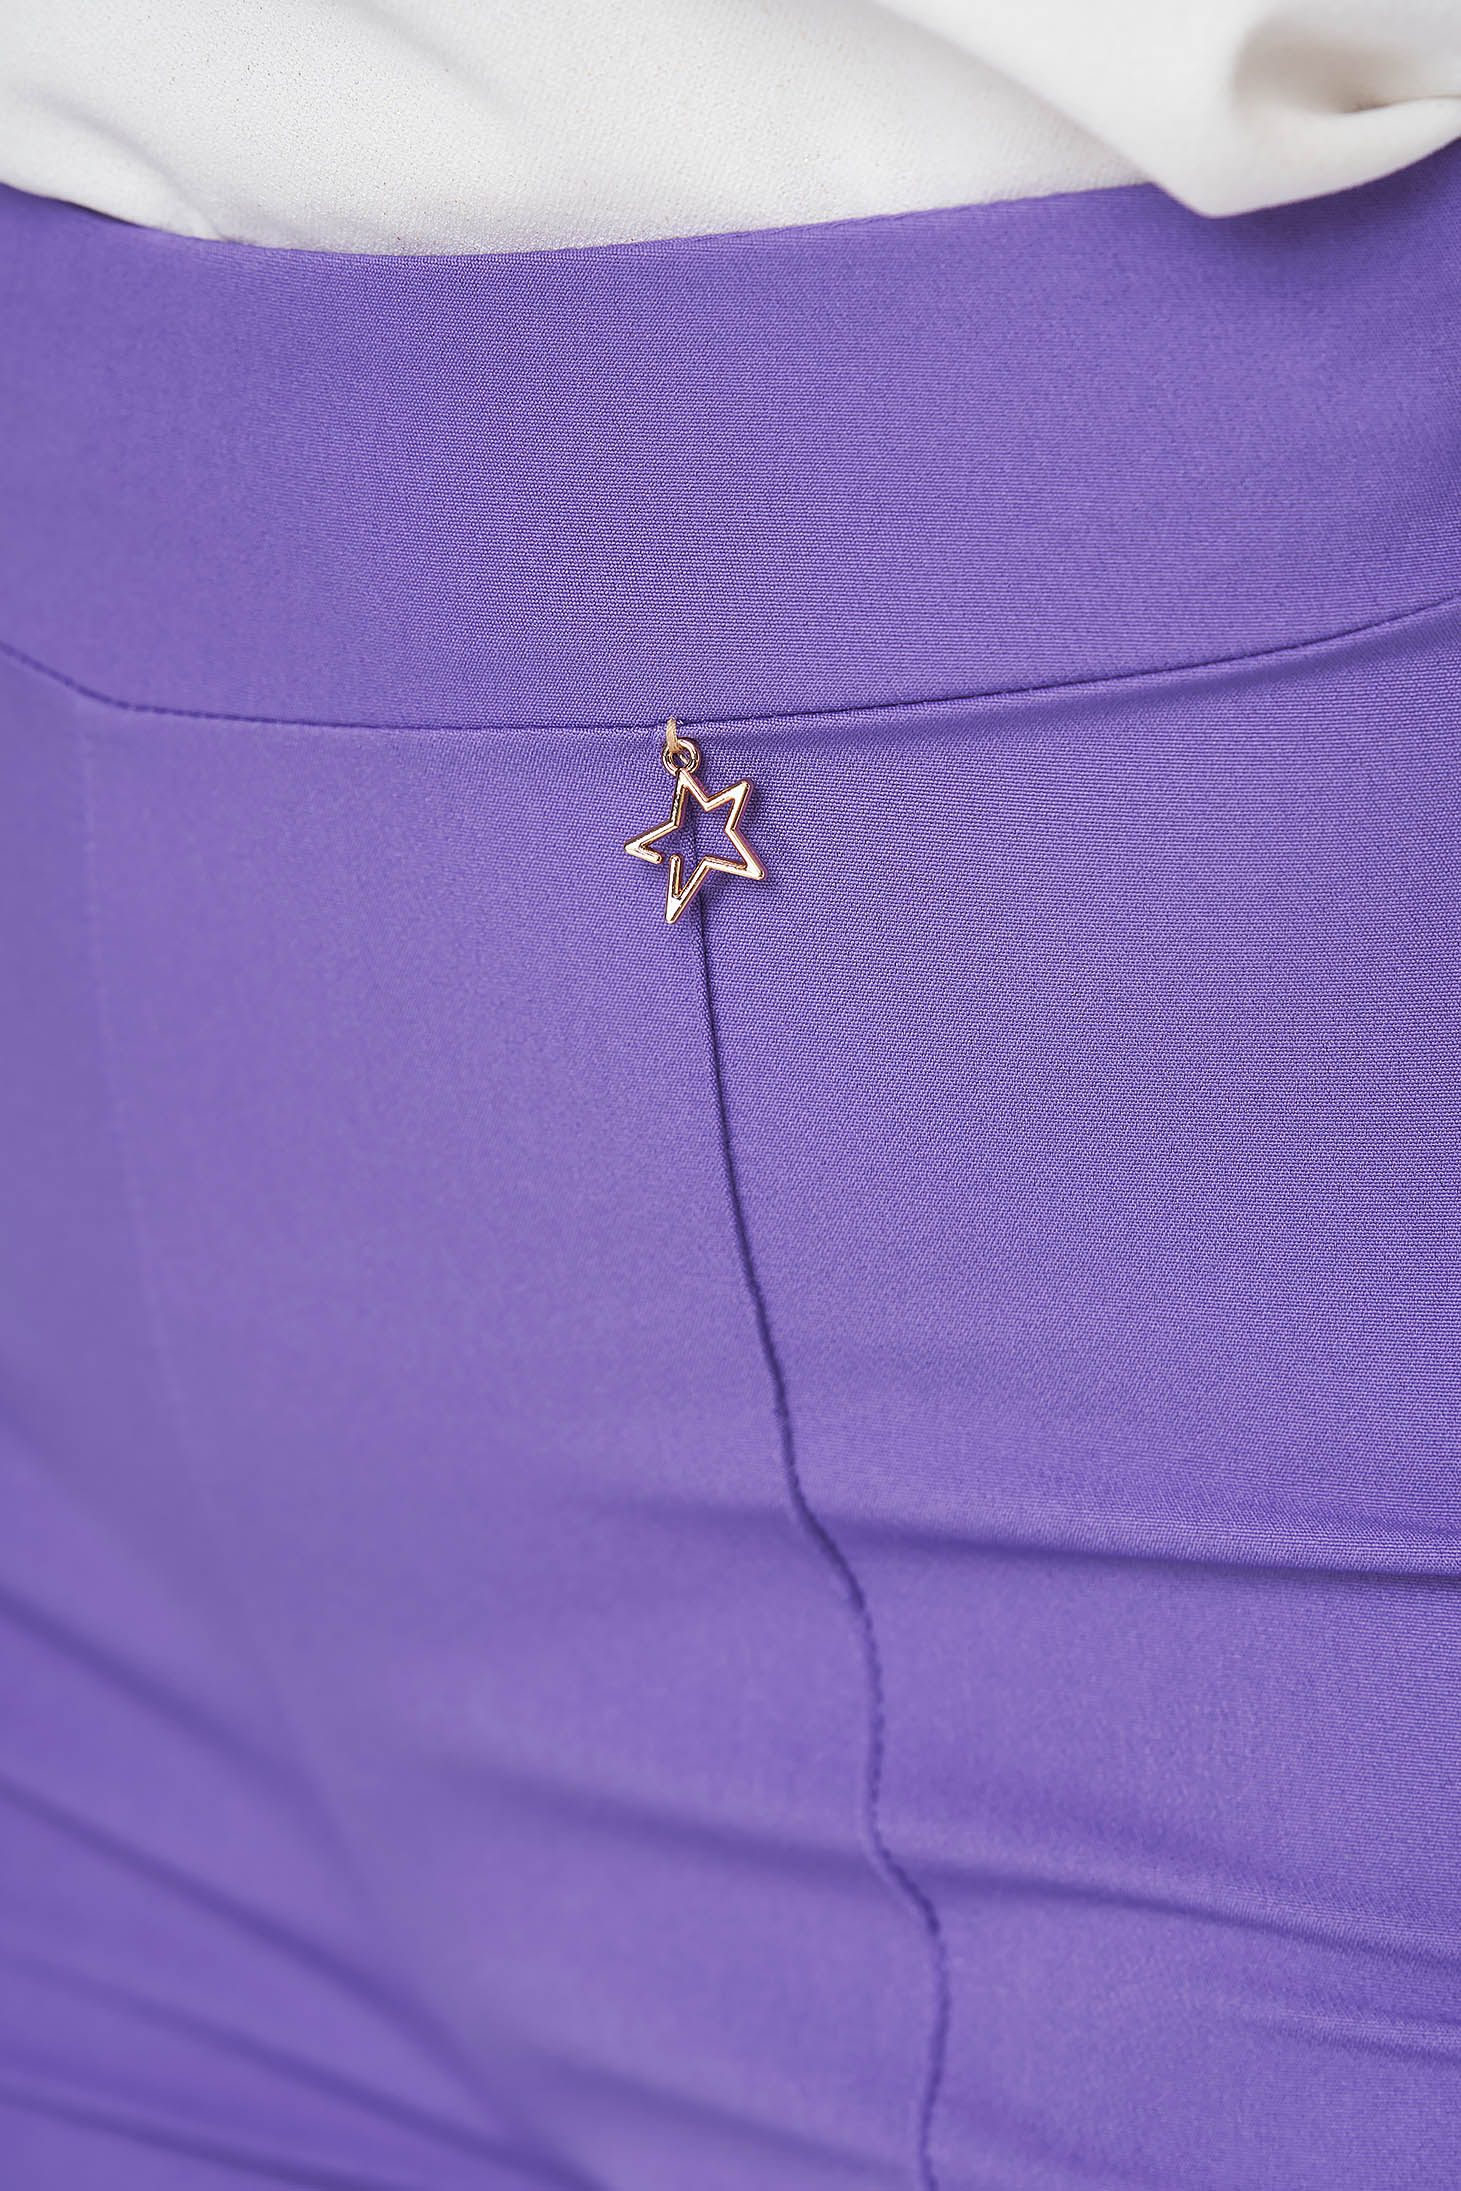 Pantaloni din stofa usor elastica mov conici cu talie inalta - StarShinerS 6 - StarShinerS.ro